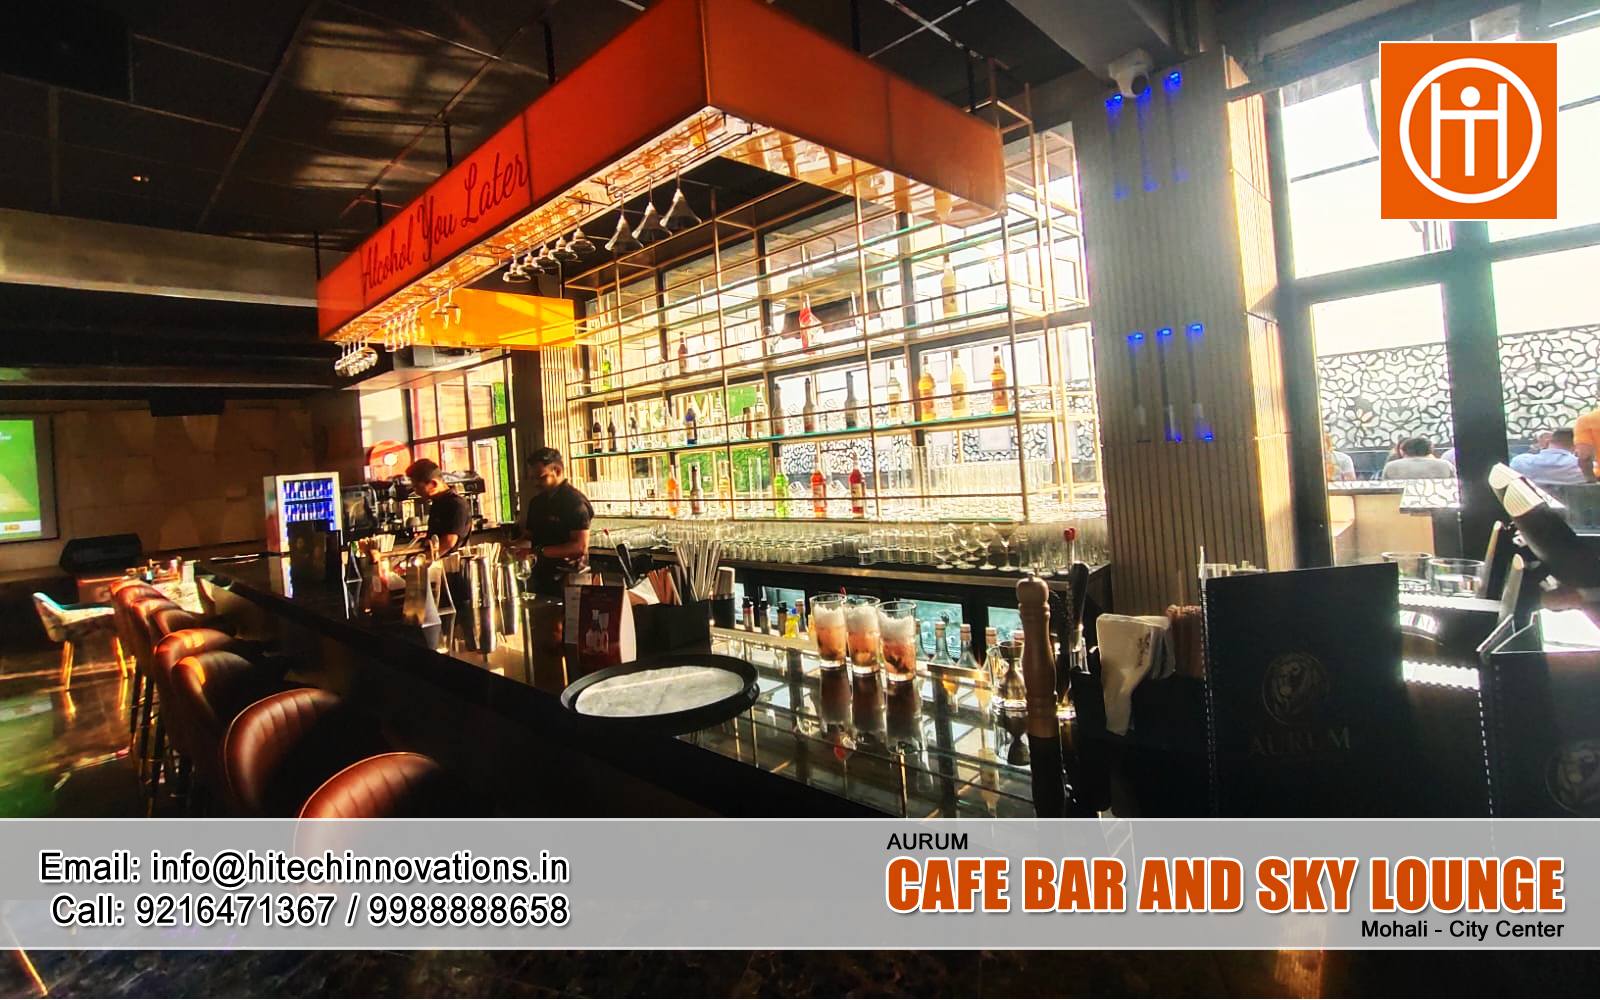 Aurum Cafe Bar and Sky Lounge Mohali